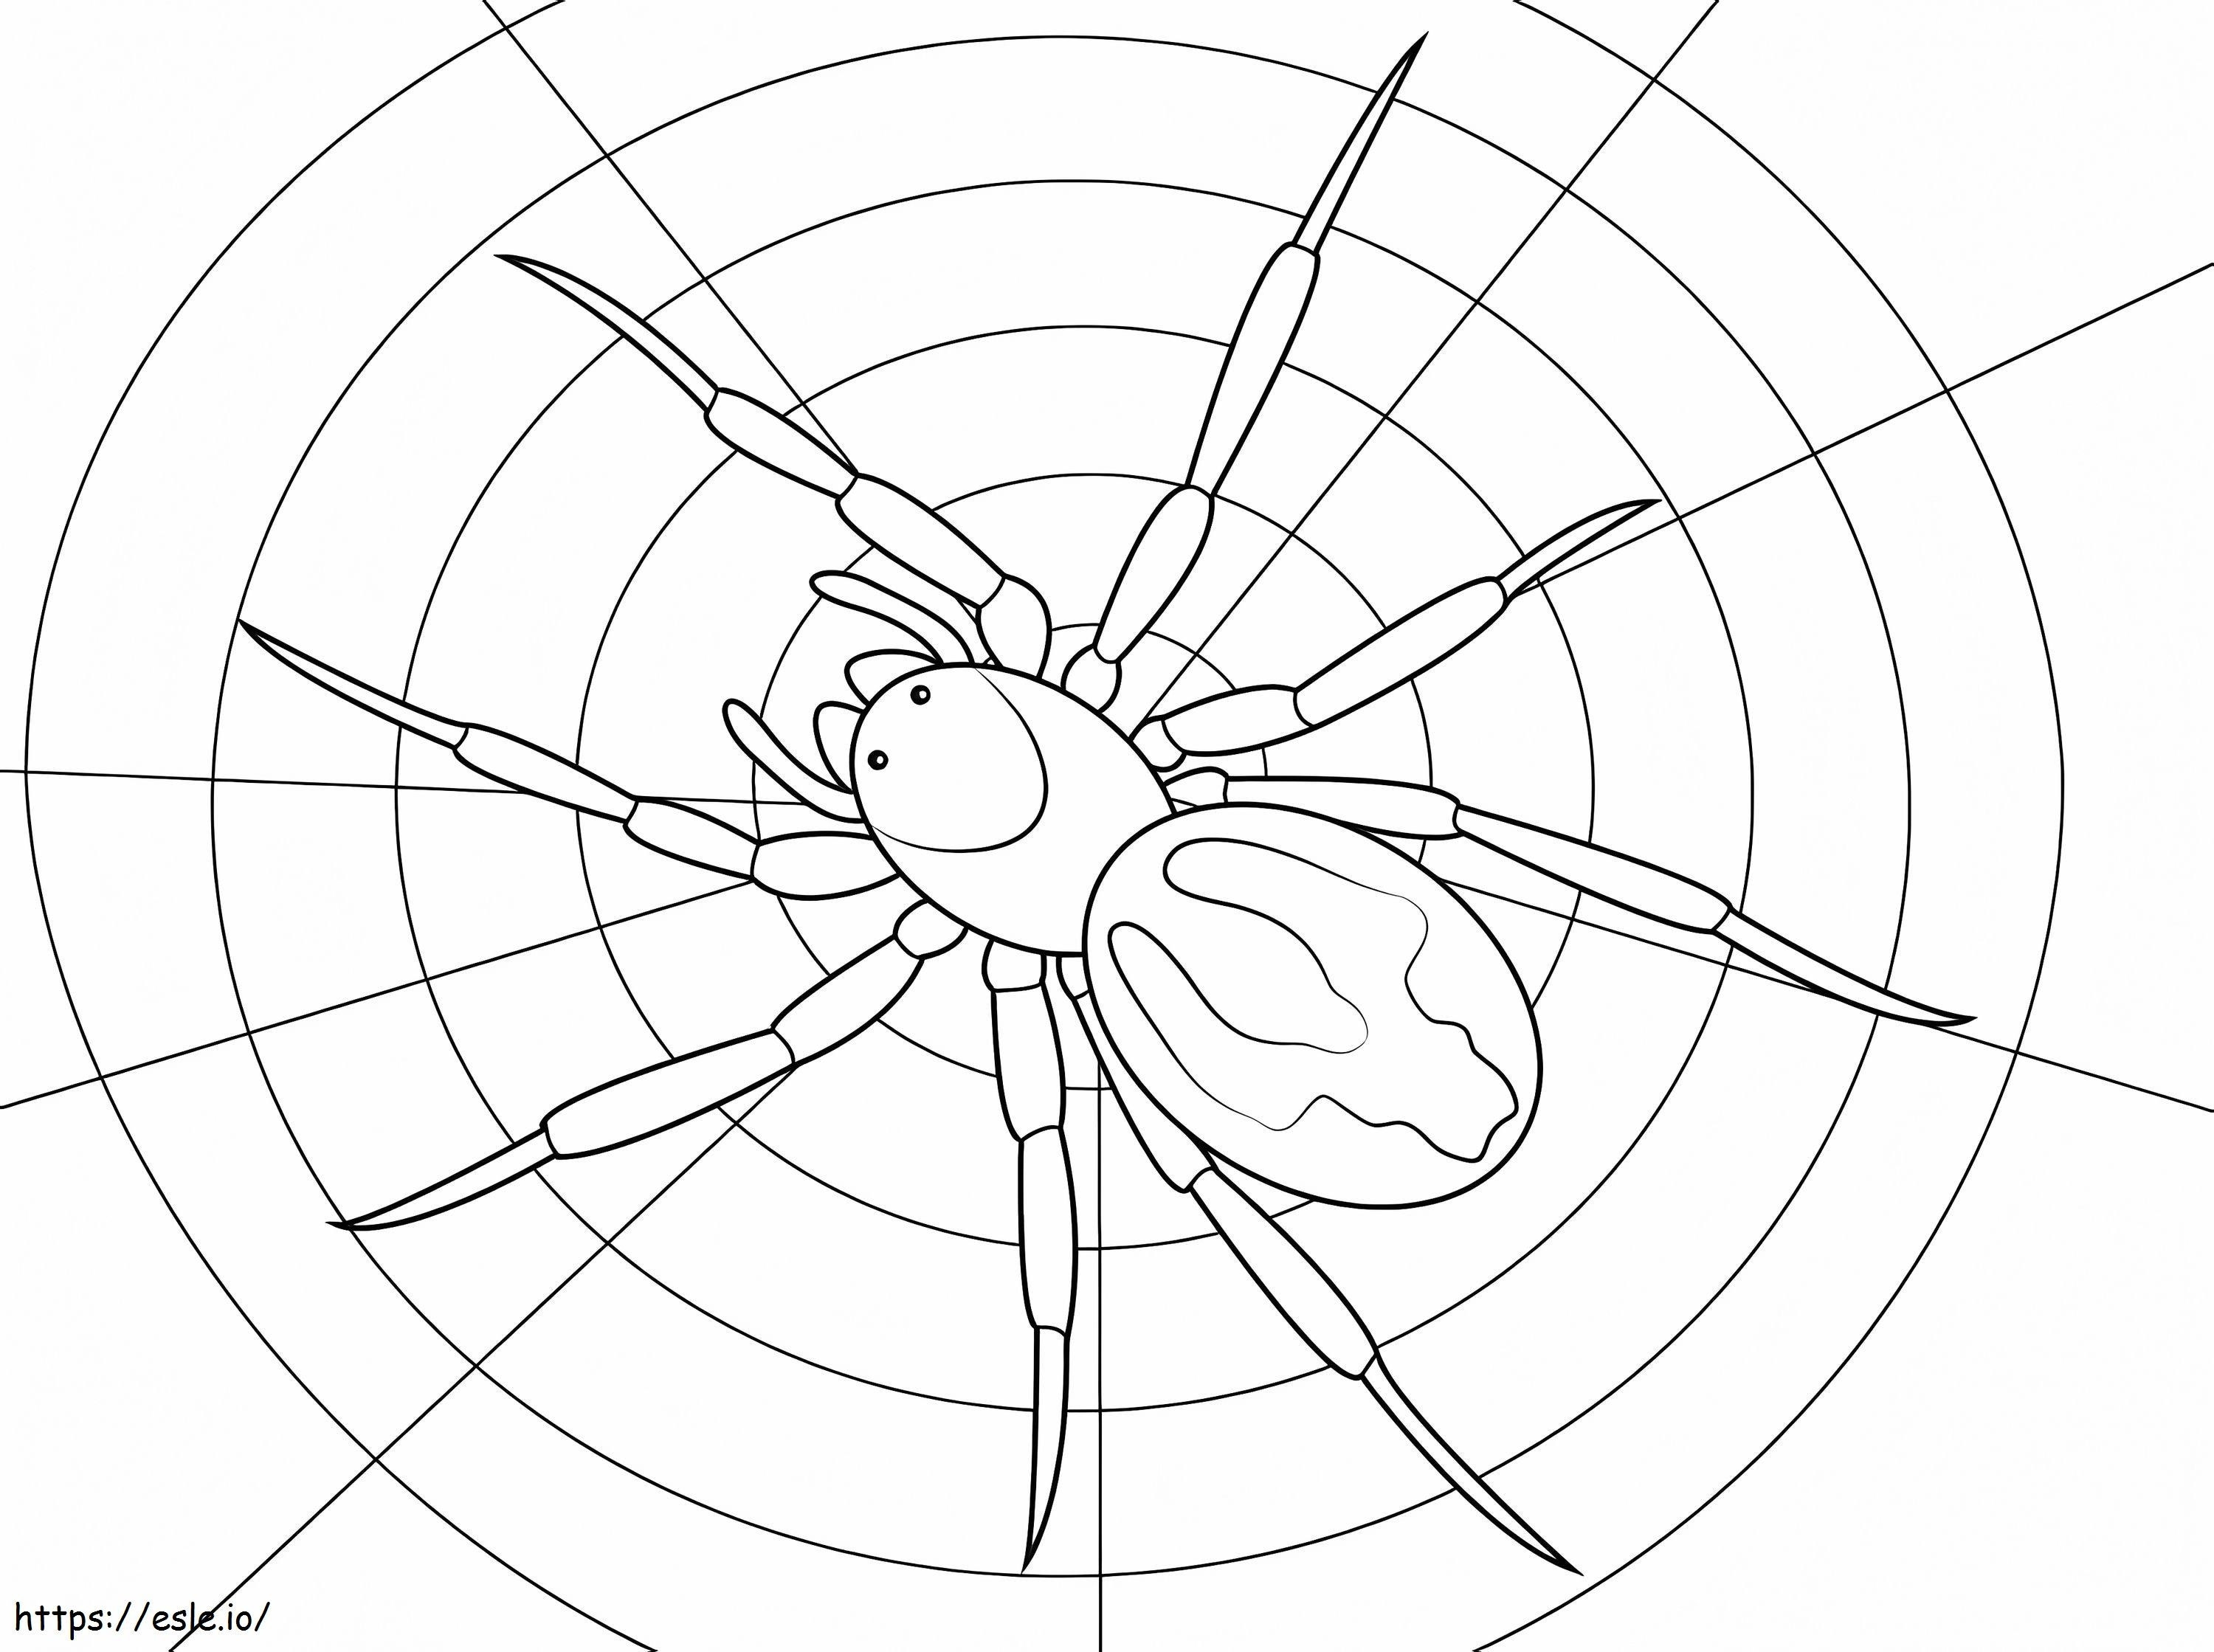 Druckbare Spinne ausmalbilder